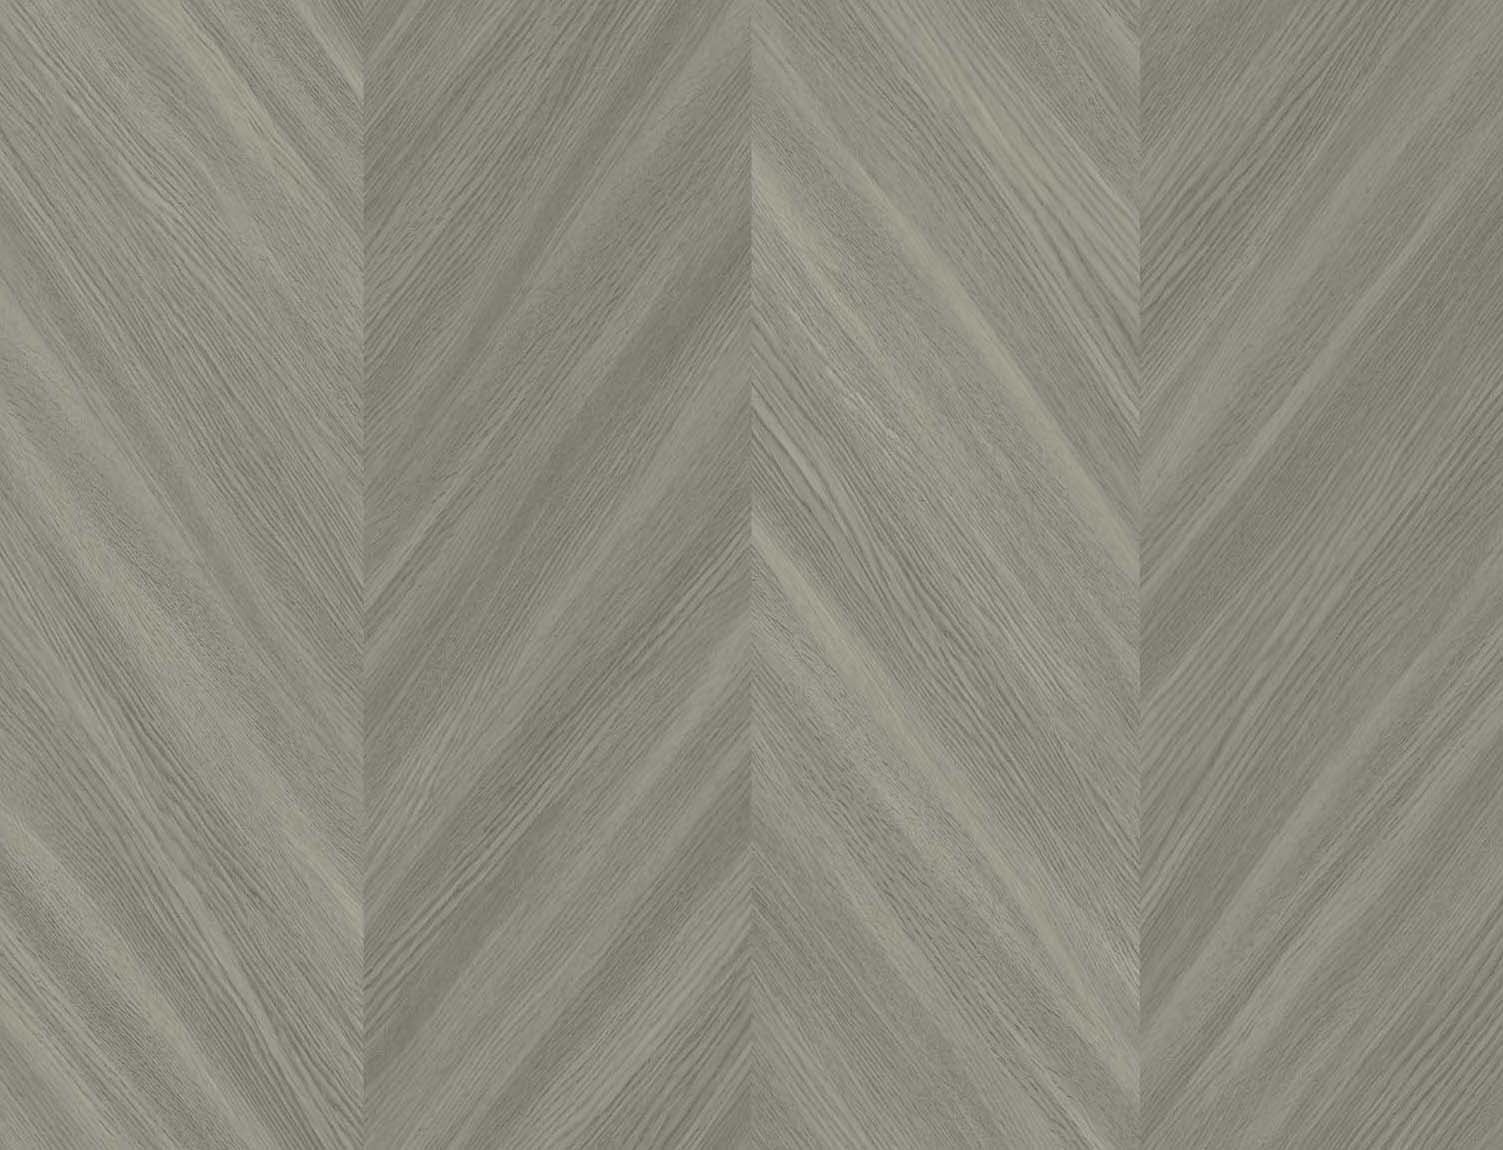 Seabrook Designs TS82107 Even More Textures Chevron Wood  Wallpaper Veneer